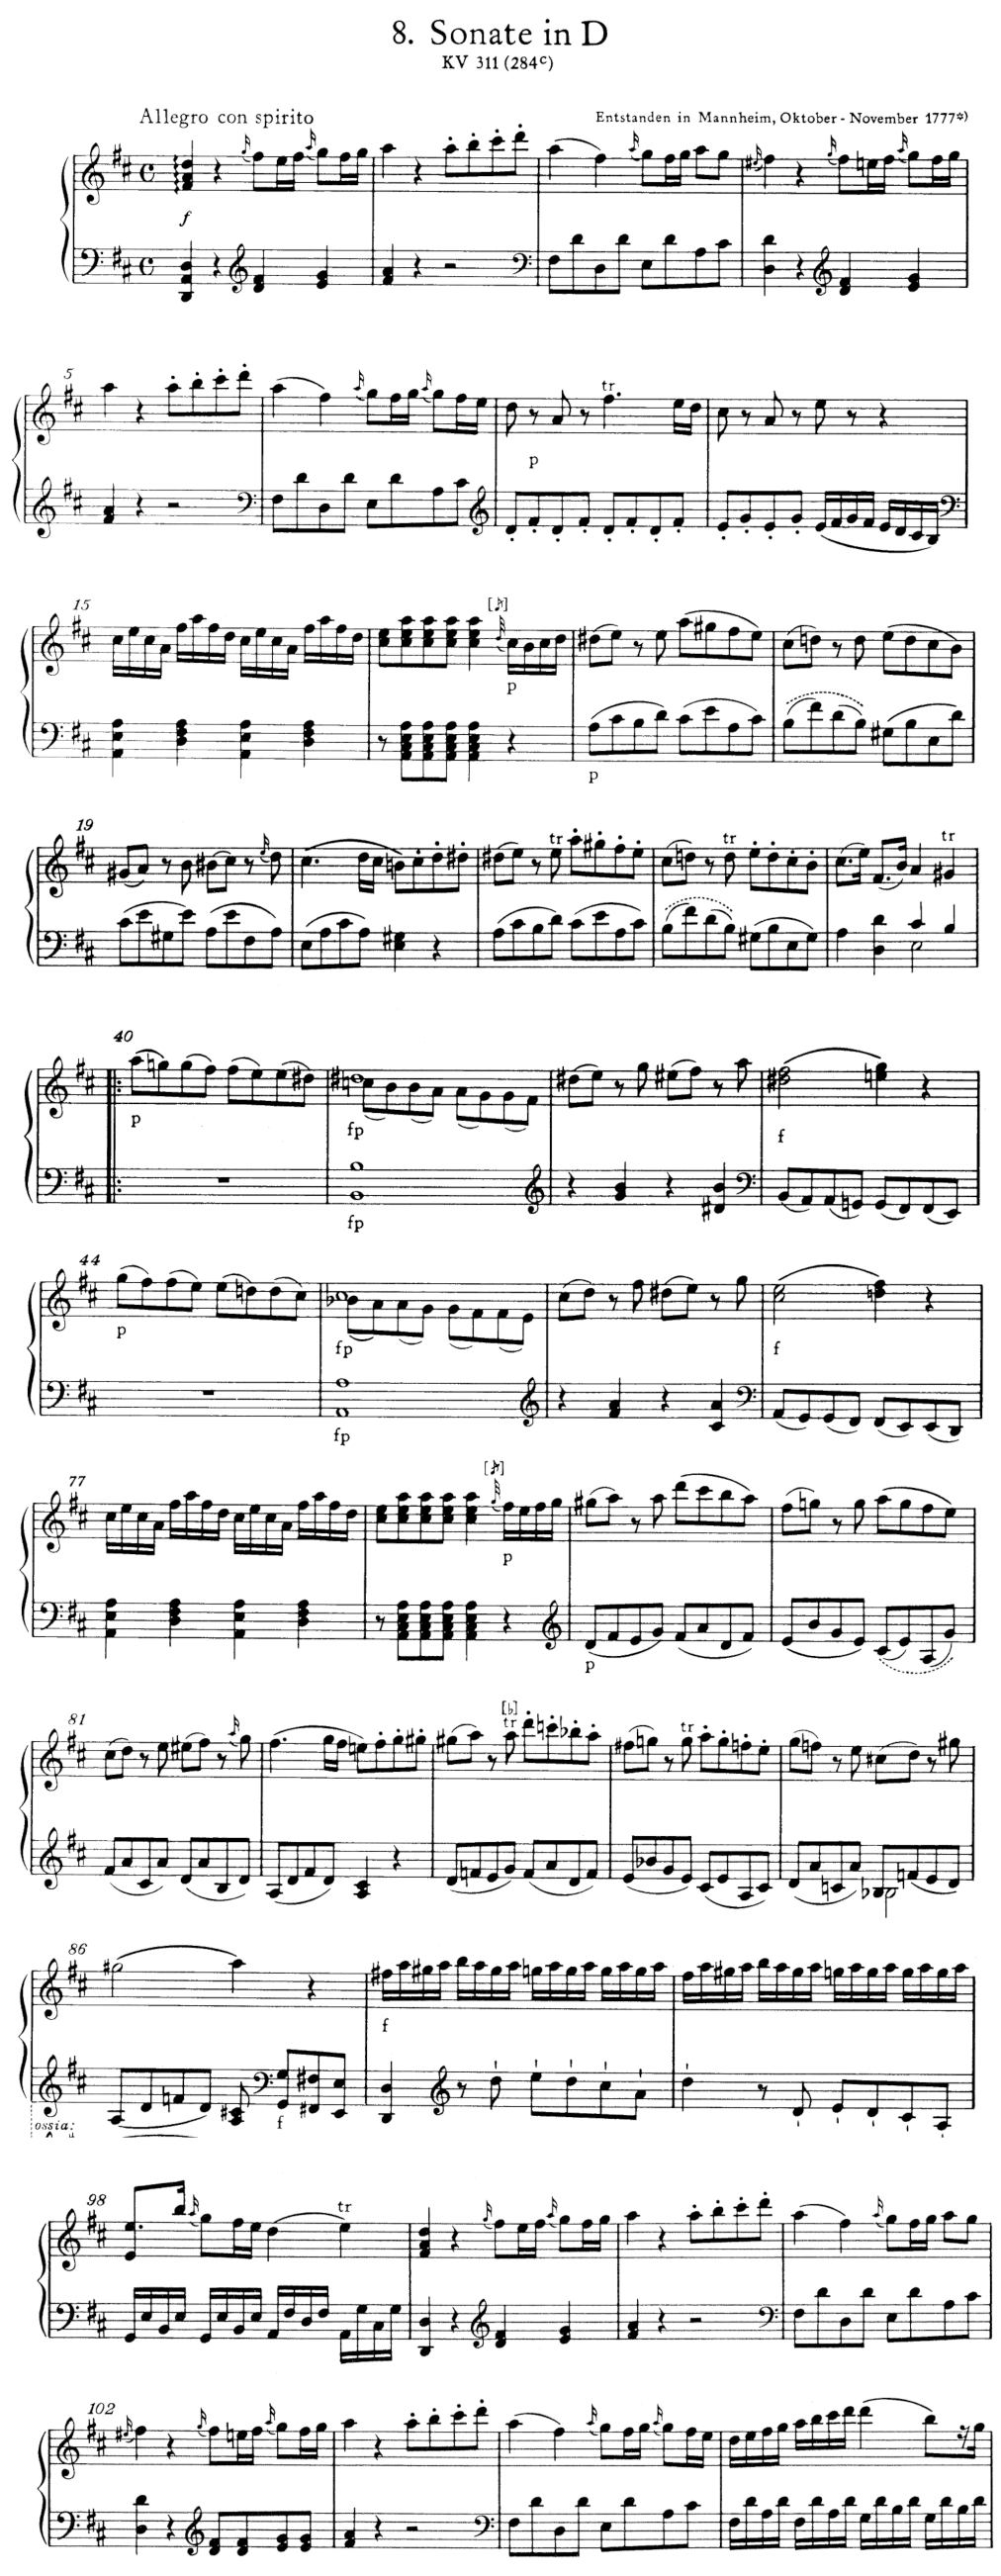 Abbildung Mozart, KV 311/i, Formbeispiel